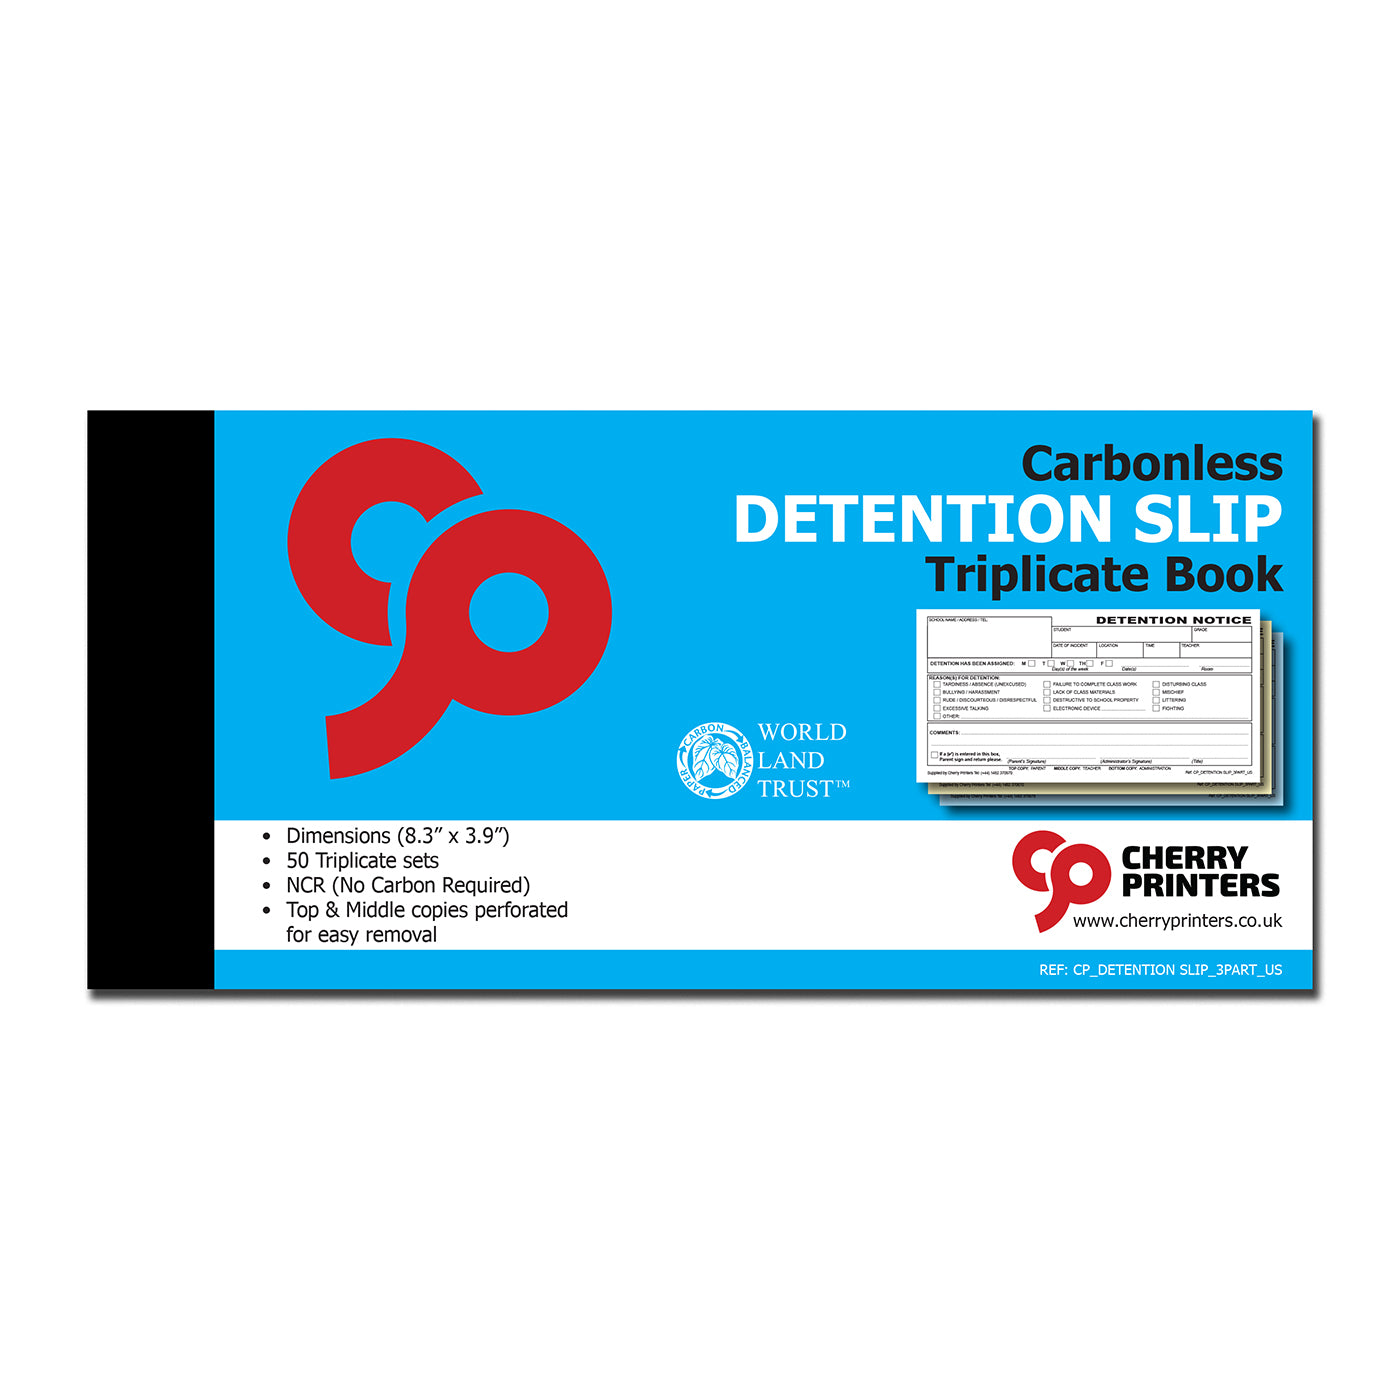 Detention Slip | Triplicate Book | 3 part | Carbonless | 50 Sets Per Book | DL - 8.3" x 3.9" | BOX OF 45 BOOKS